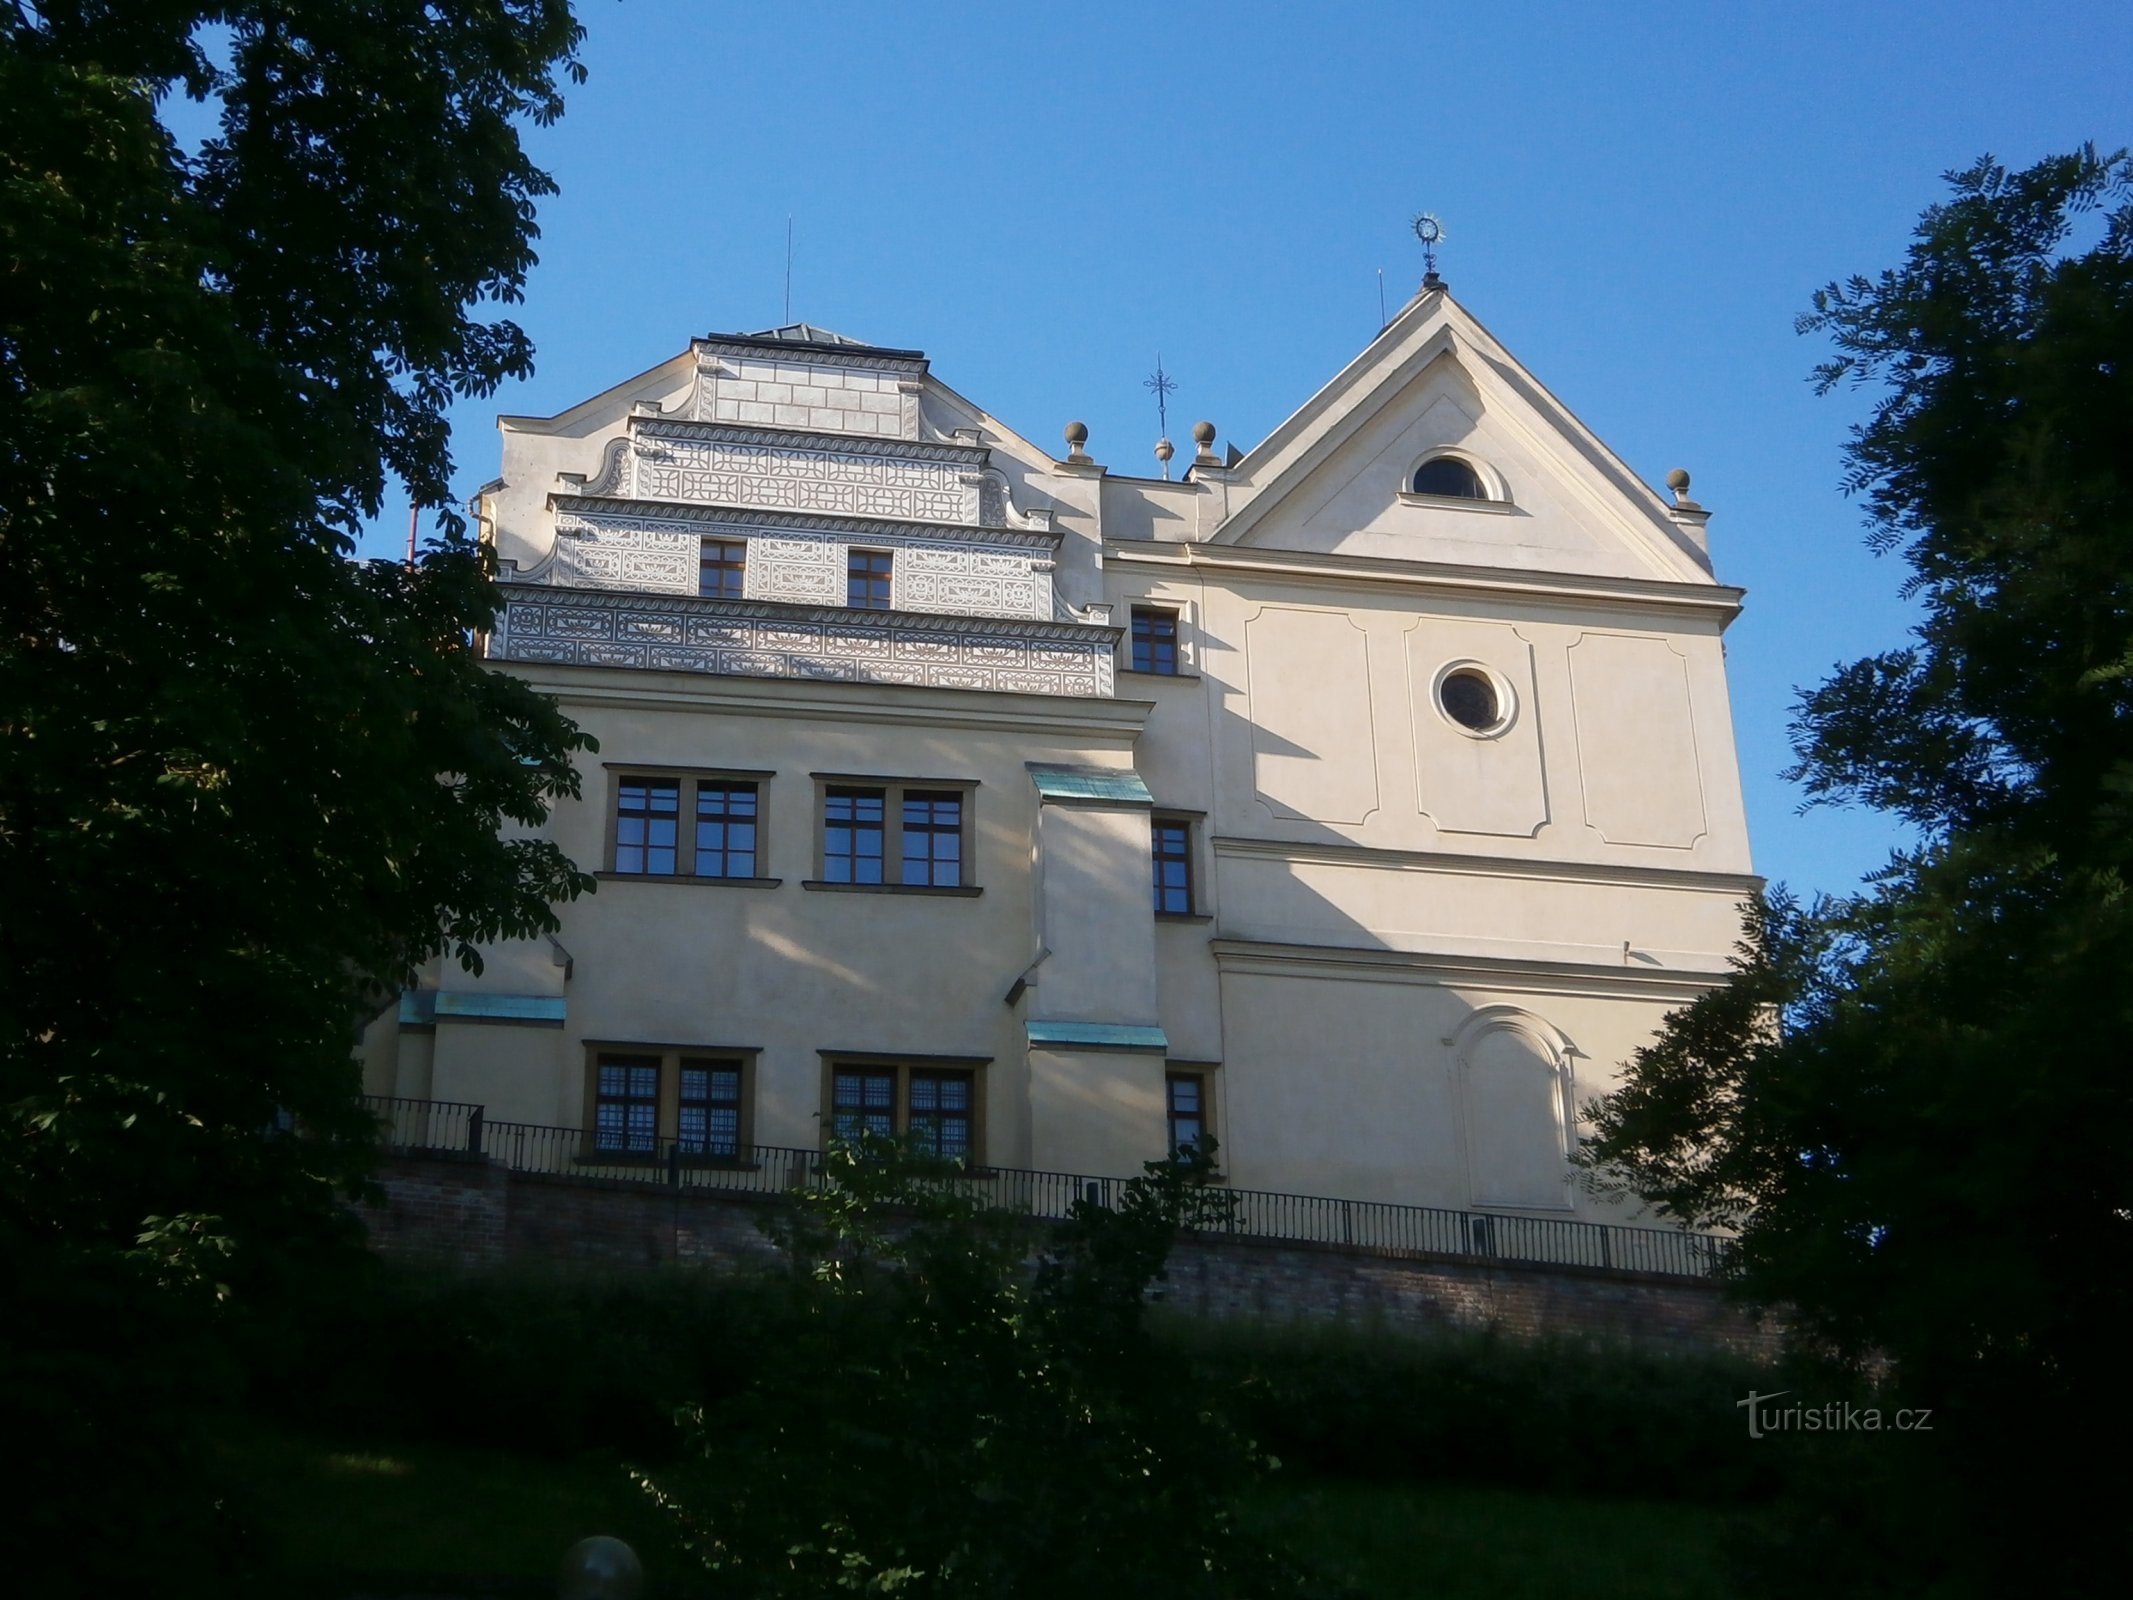 Borggravens hus med kirken St. Johannes af Nepomuck (Hradec Králové, 2.7.2016. juli XNUMX)